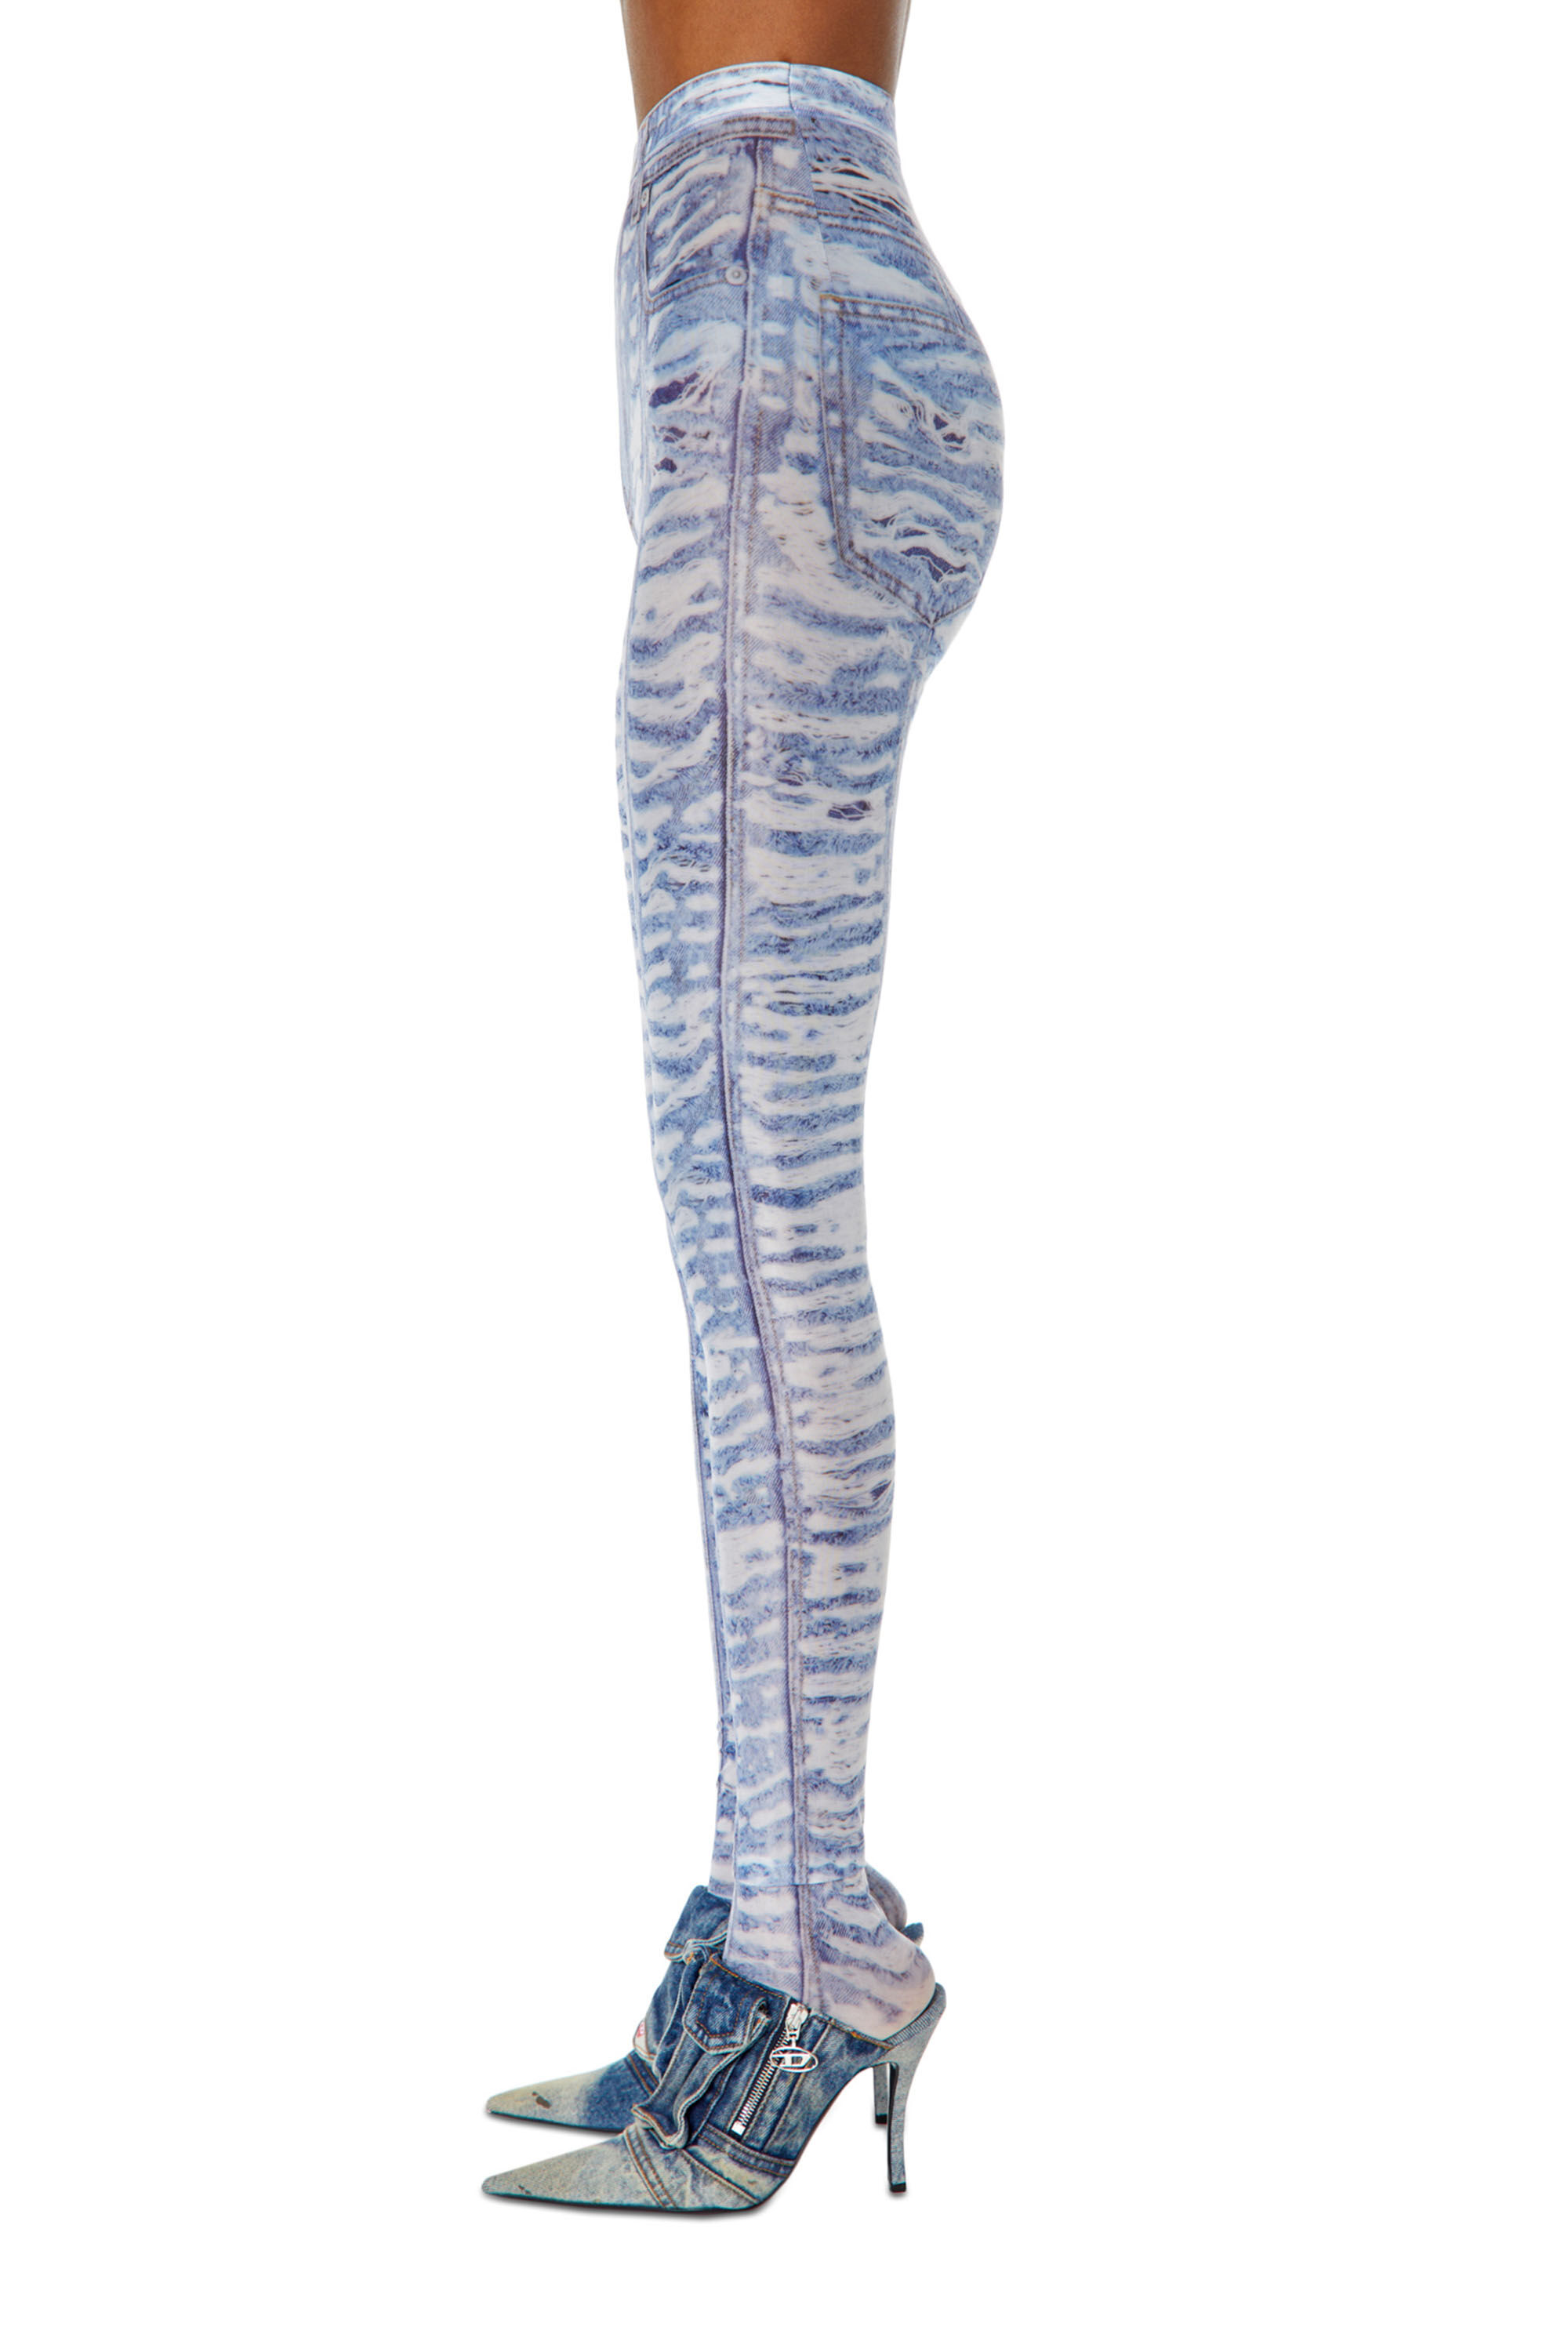 P-KOLL-E3 Woman: Leggings in camo-printed nylon